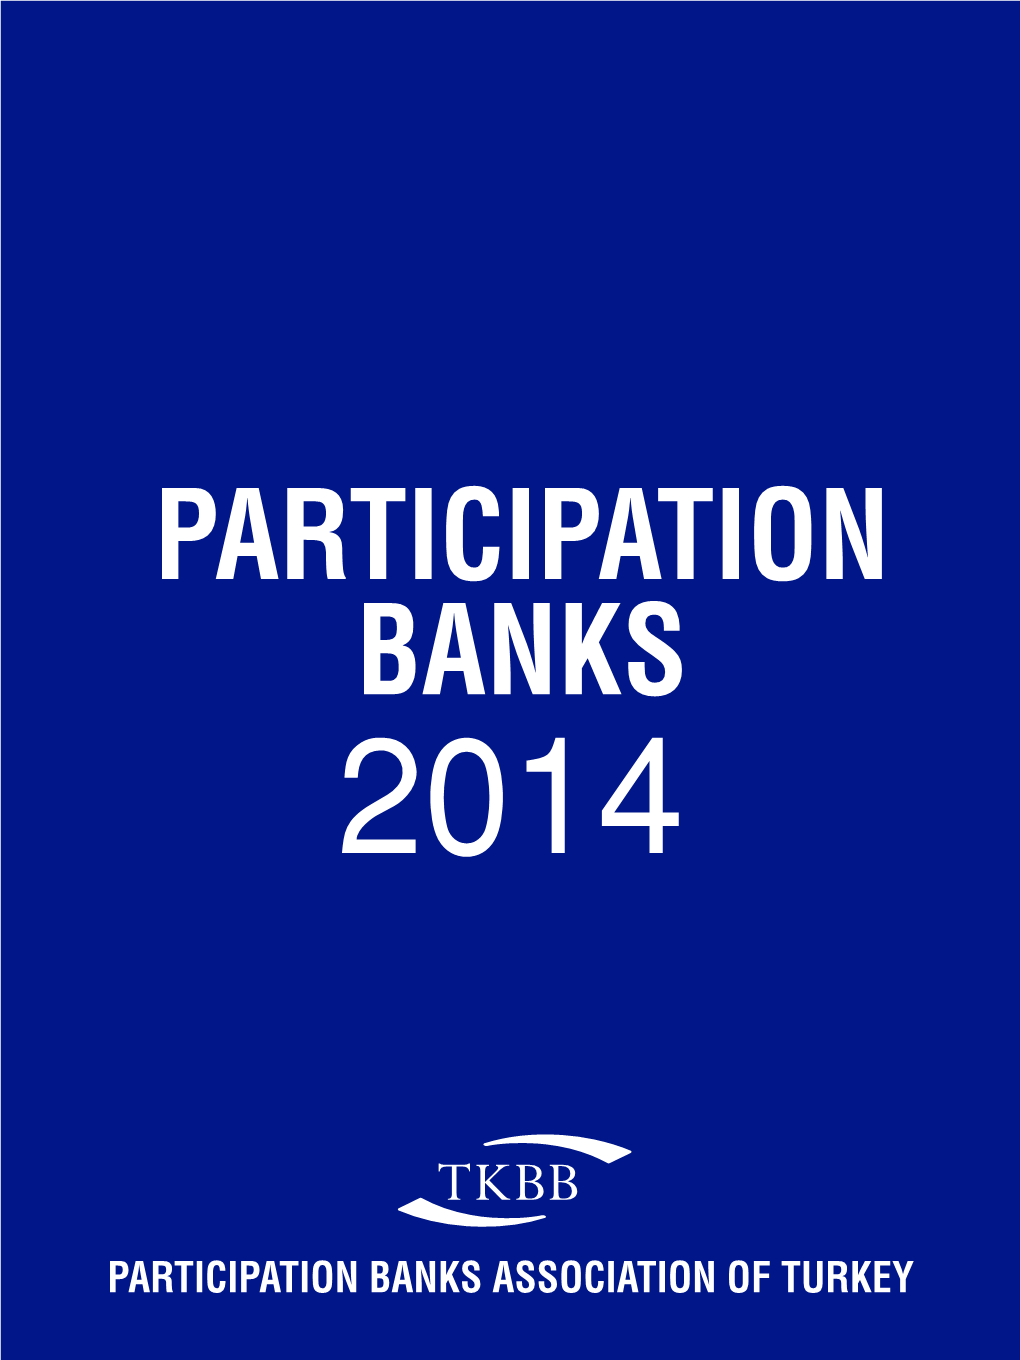 Participation Banks Association of Turkey